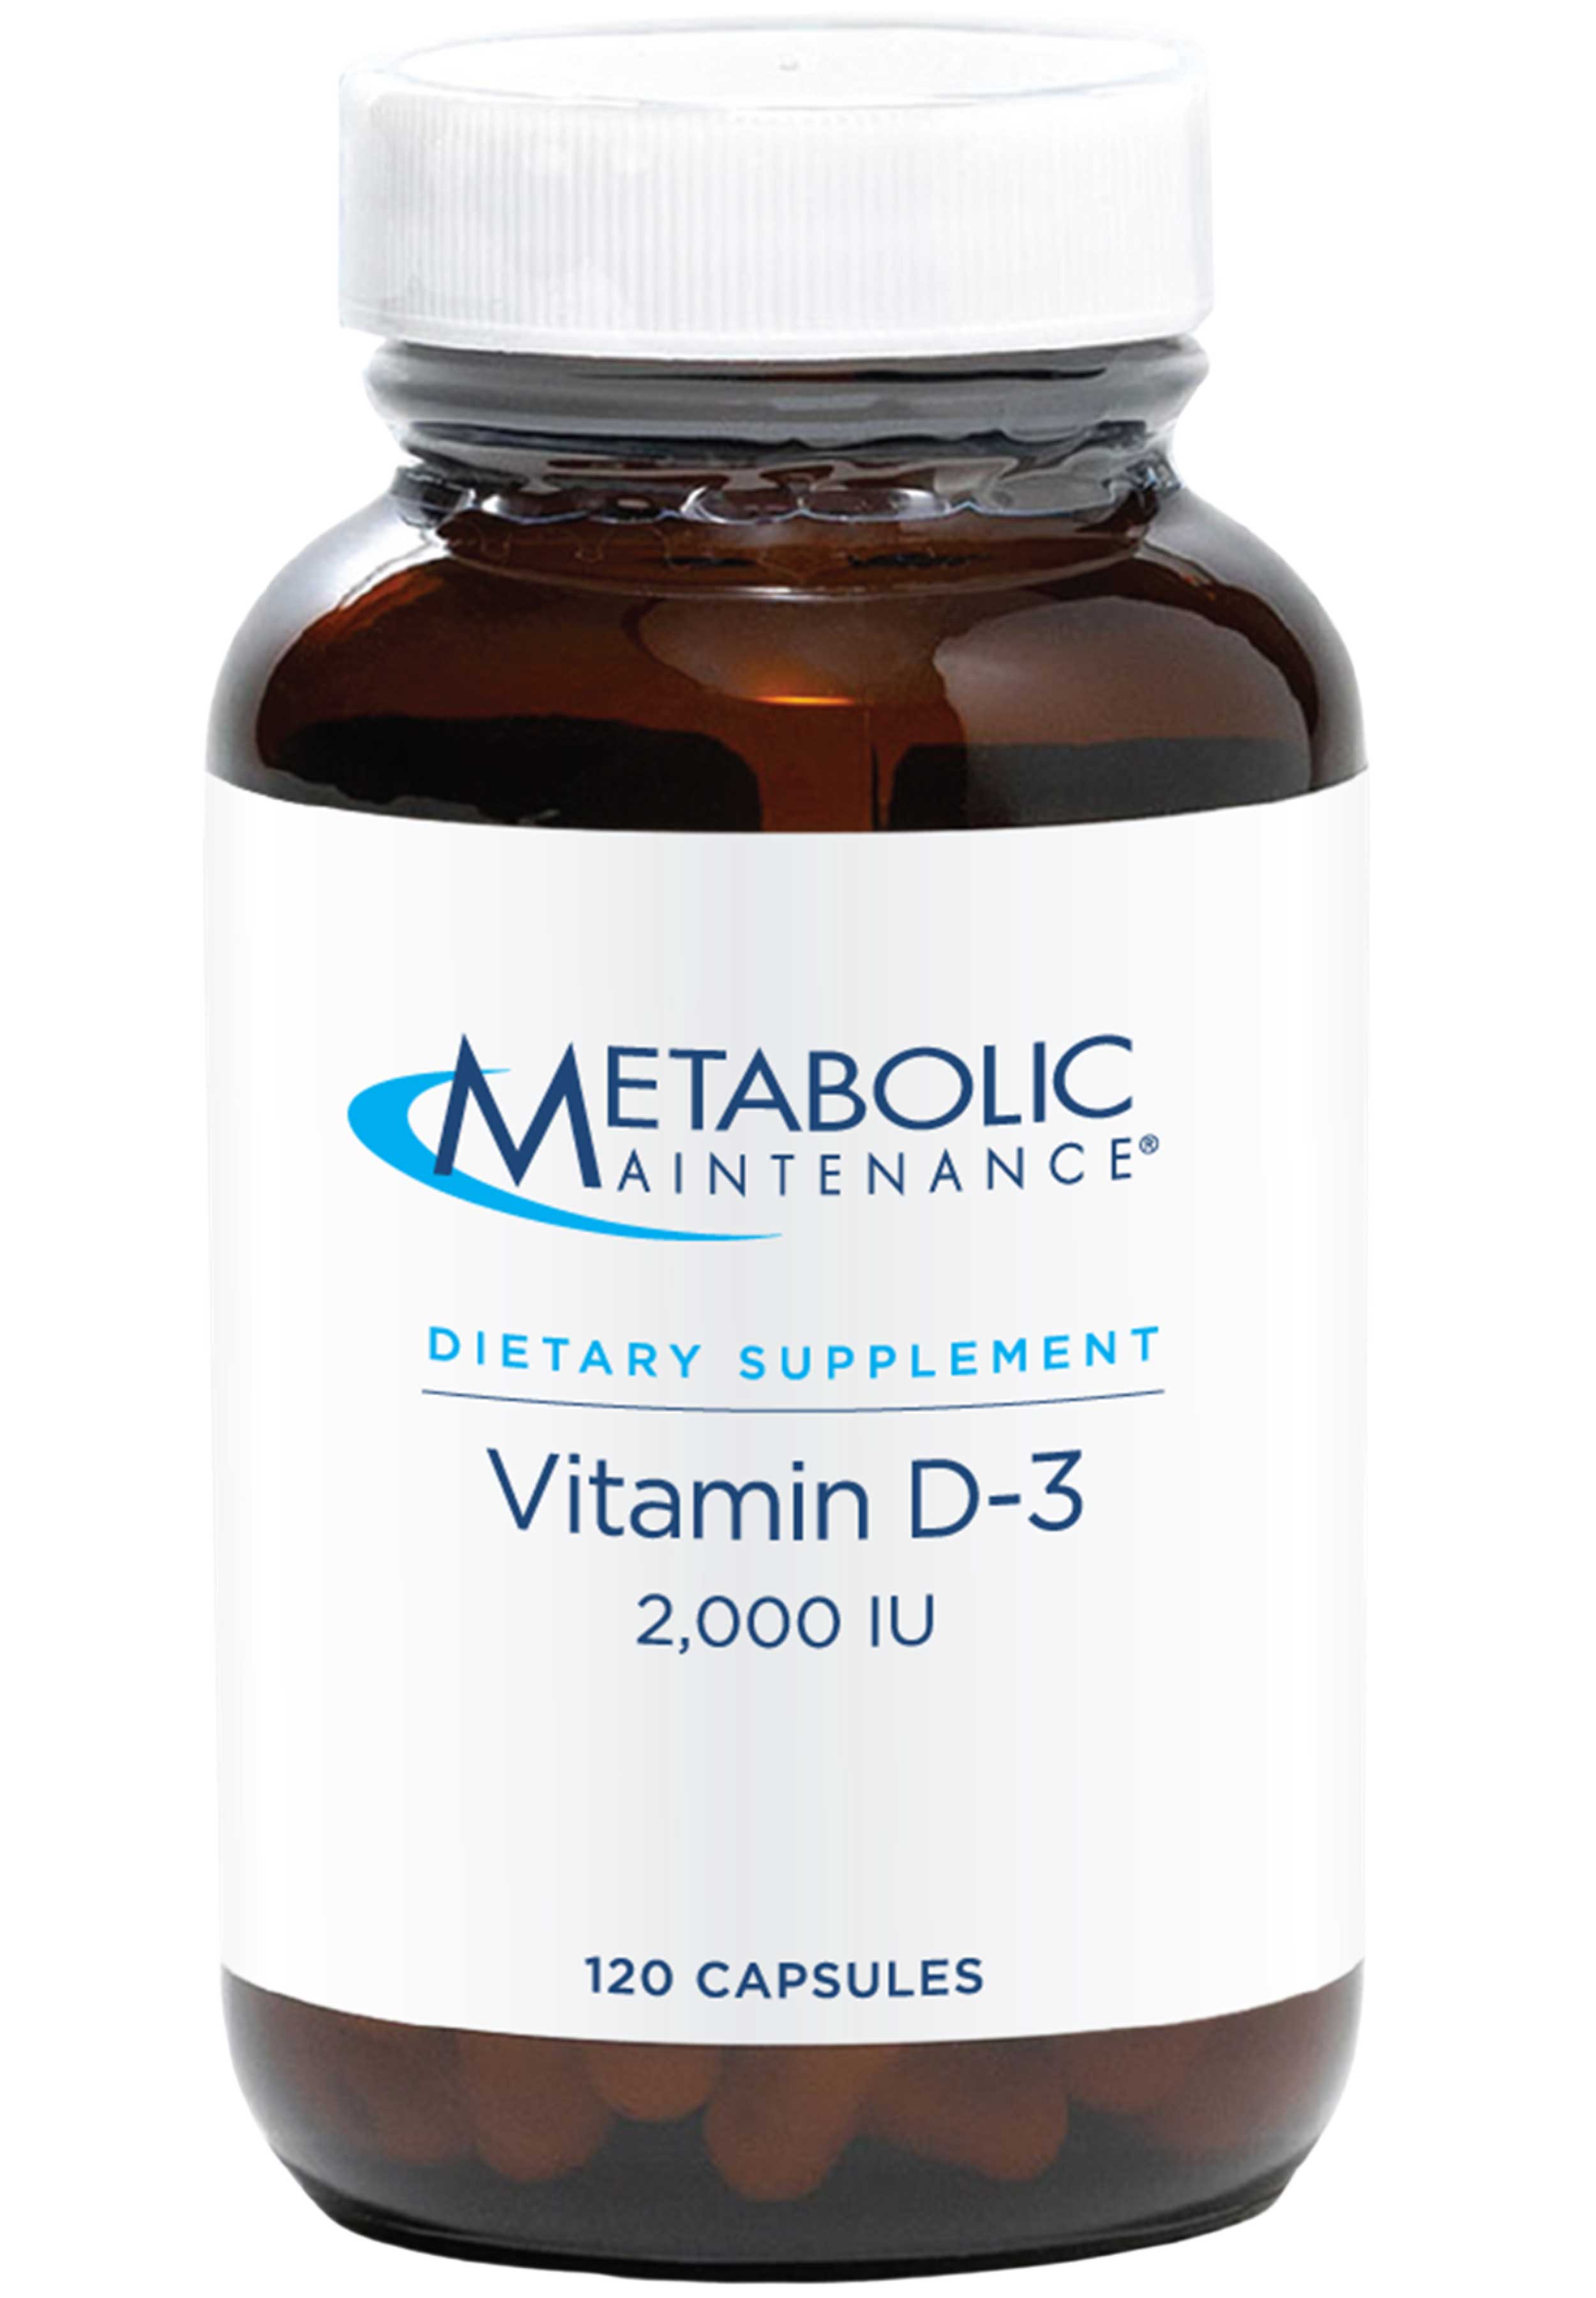 Metabolic Maintenance Vitamin D-3